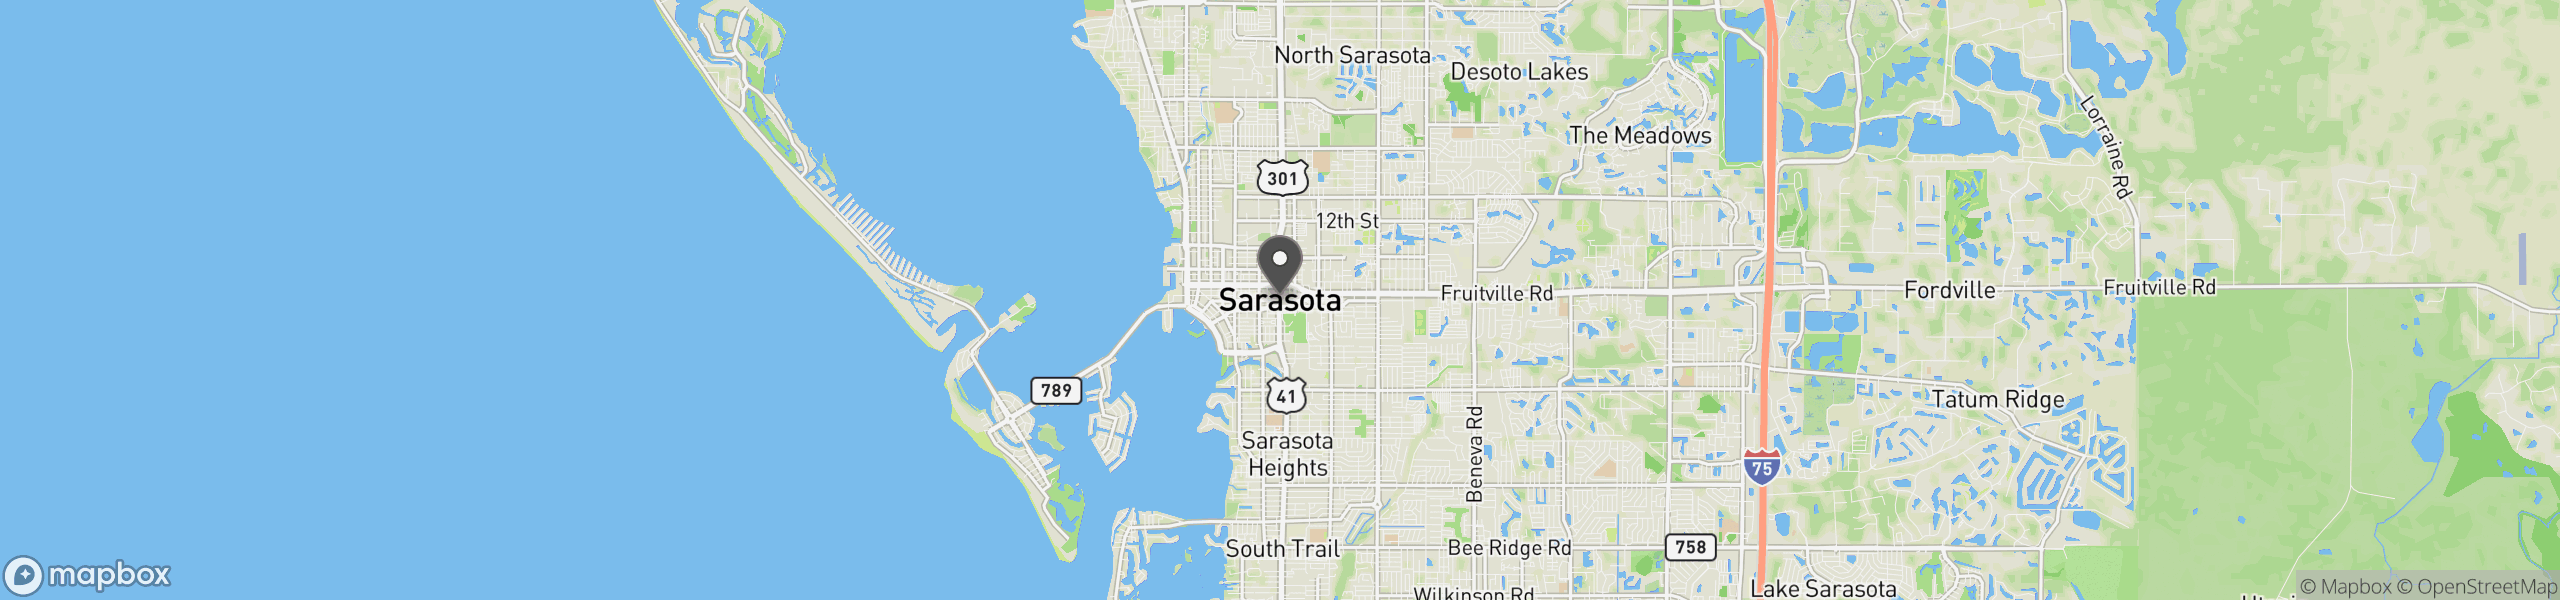 Sarasota, FL 34230